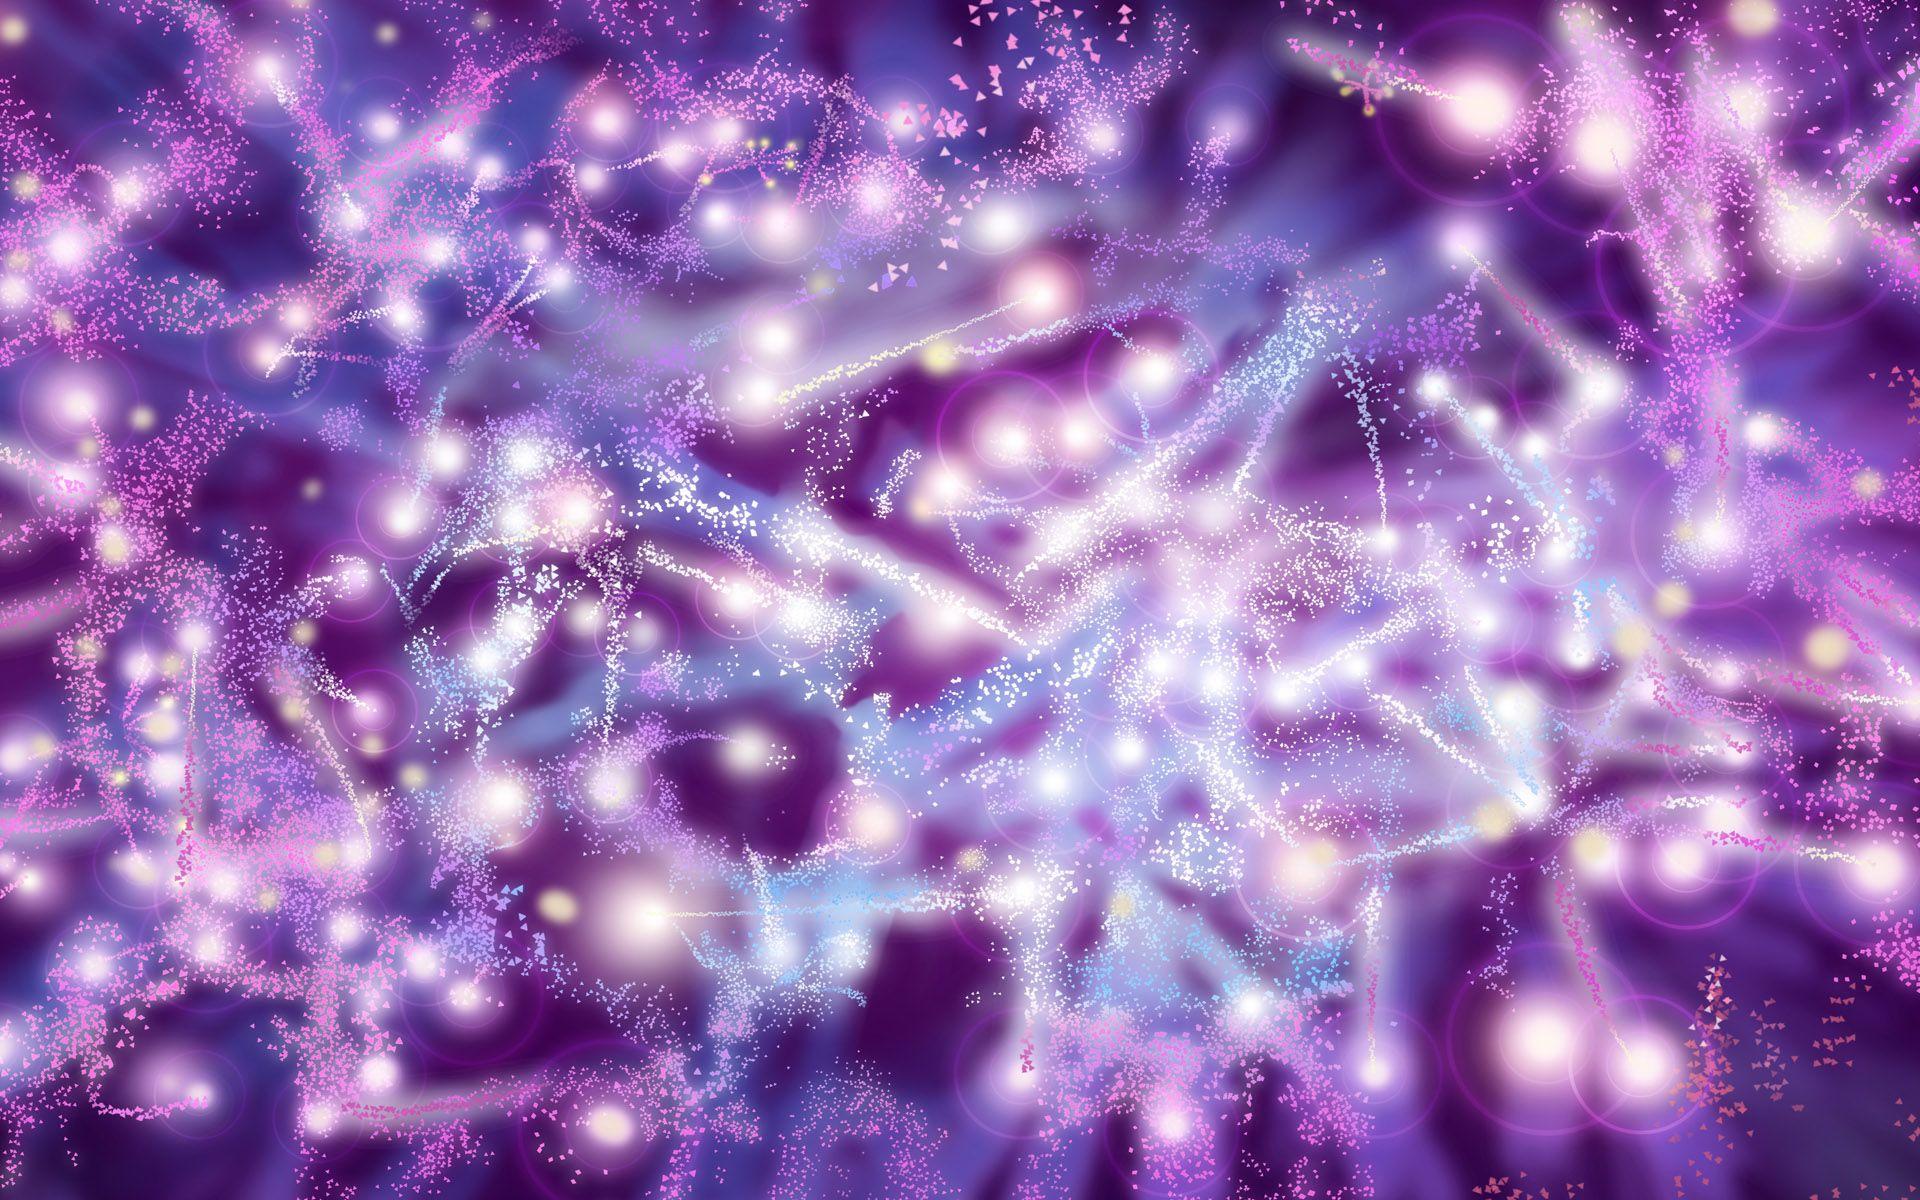 Purple Sparks wallpaper. Purple Sparks